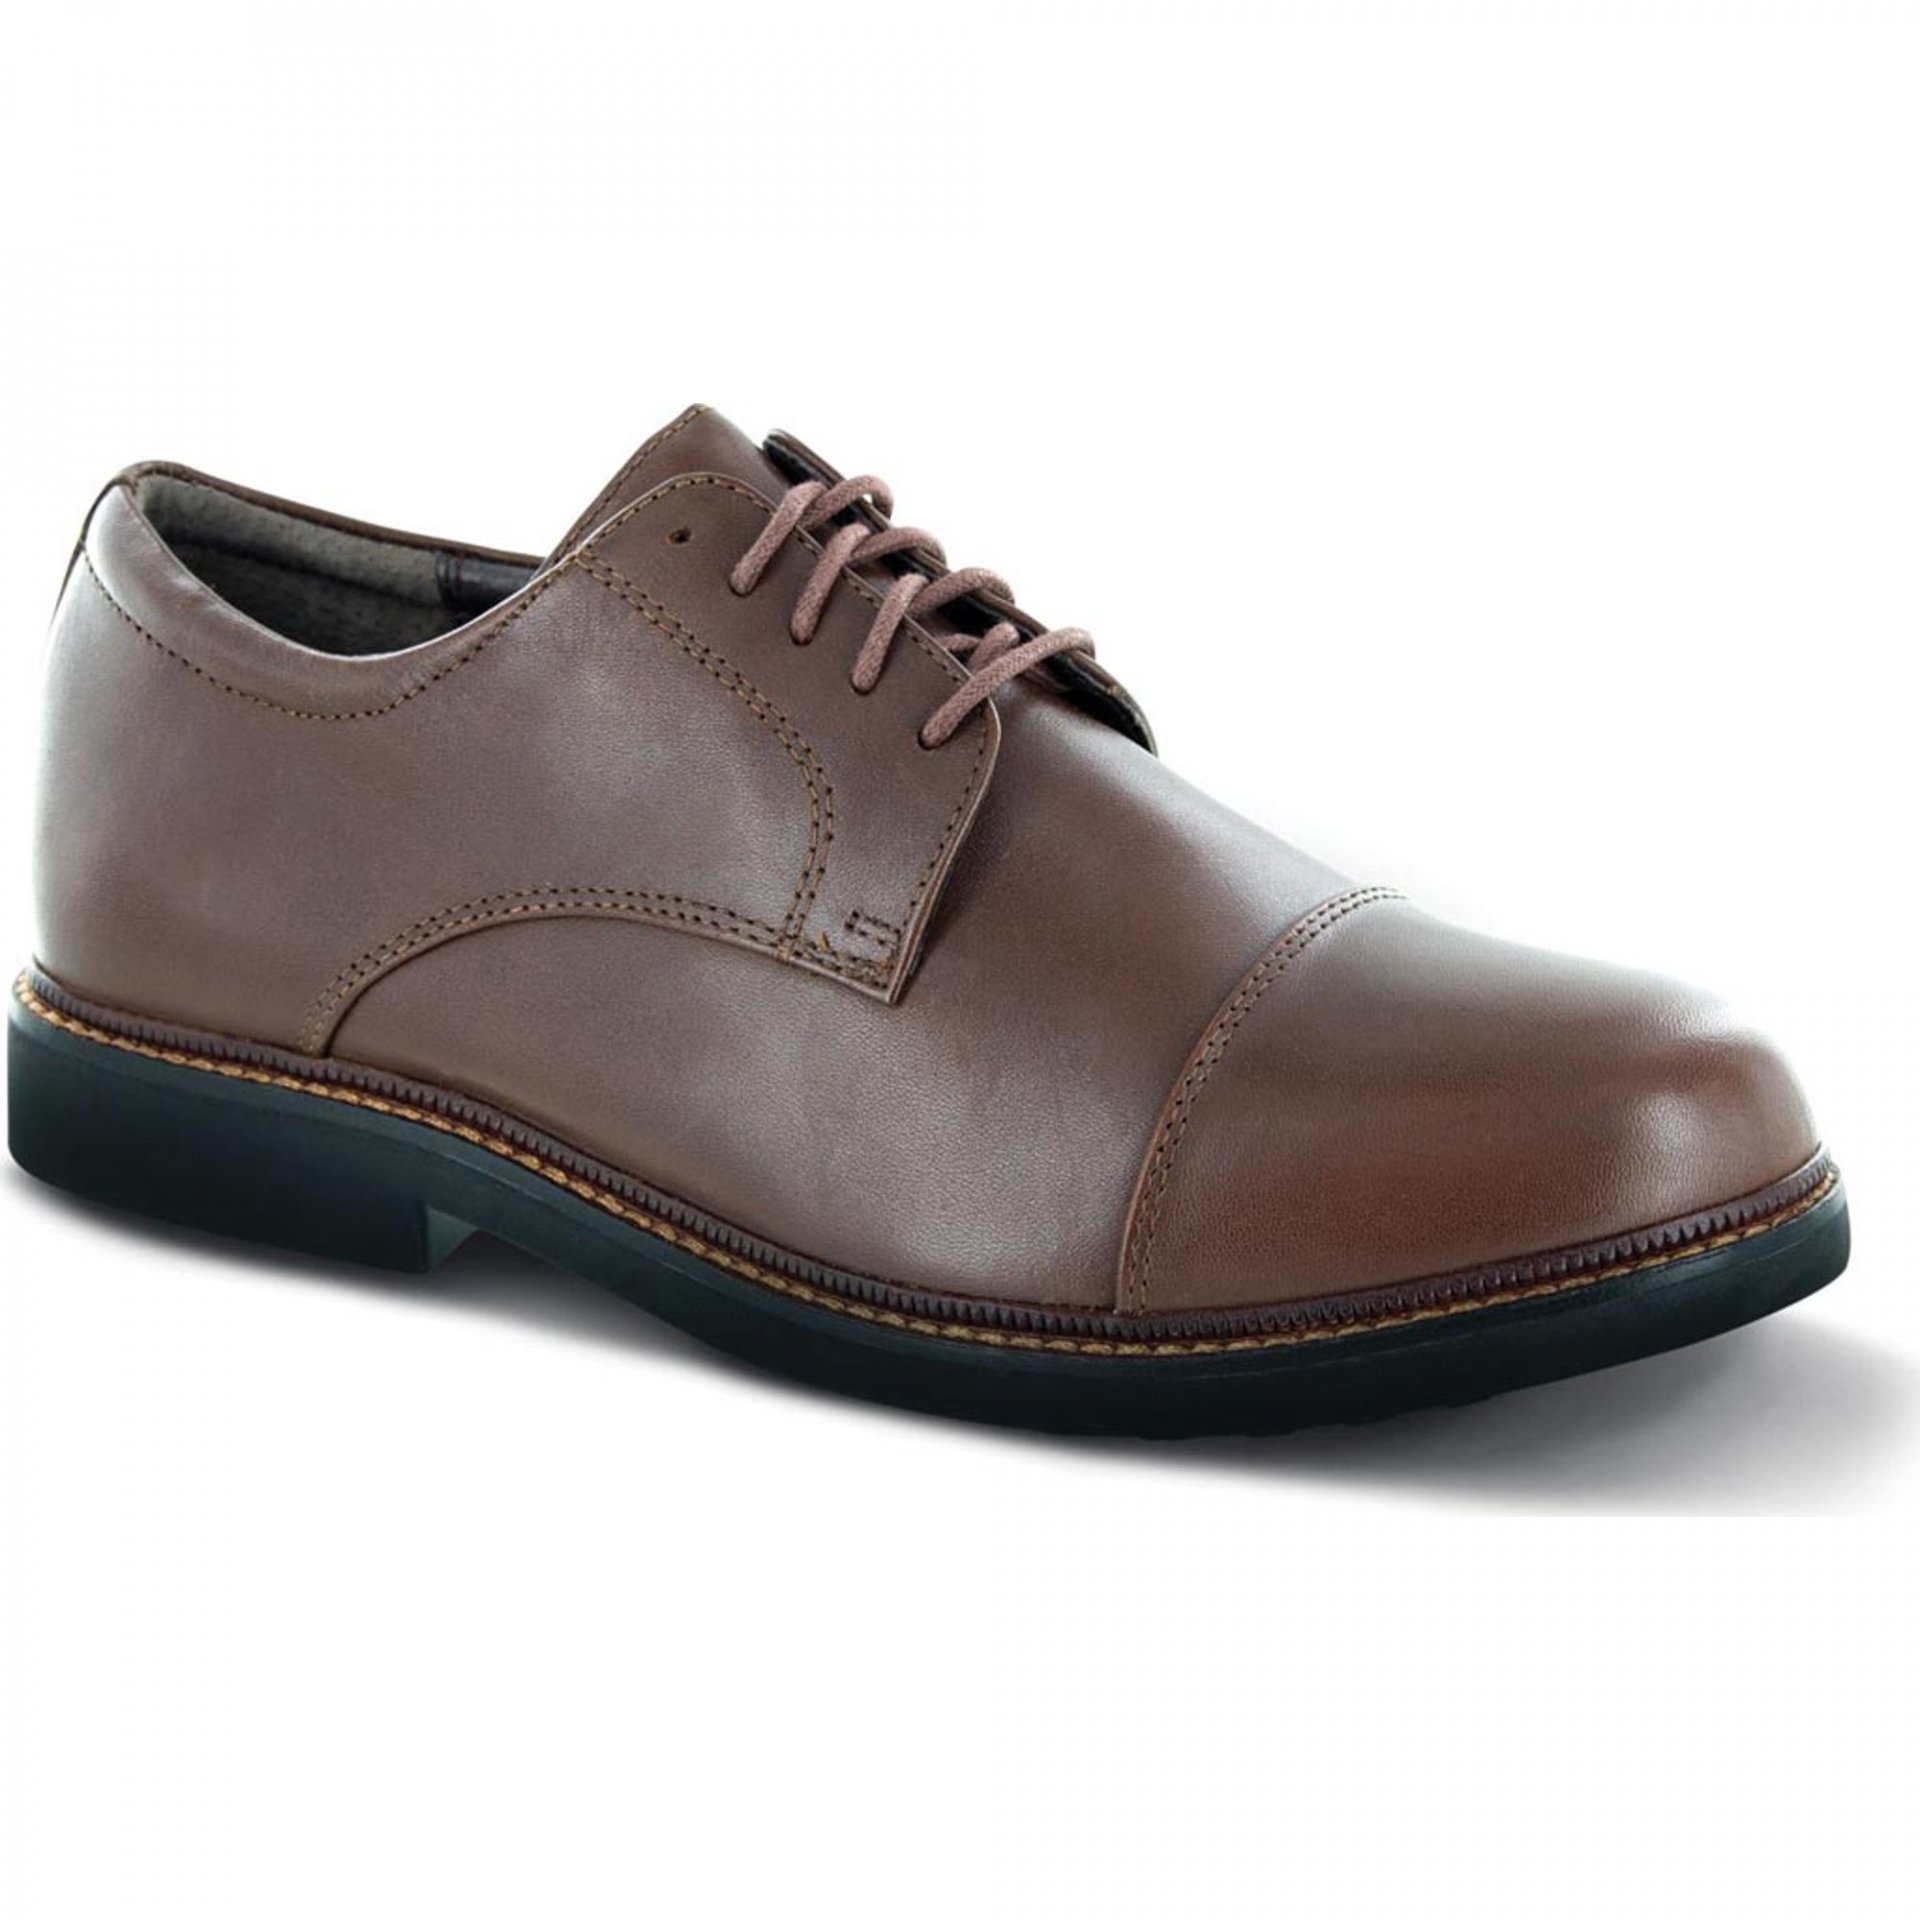 Men's LT610 Oxford Brown Leather